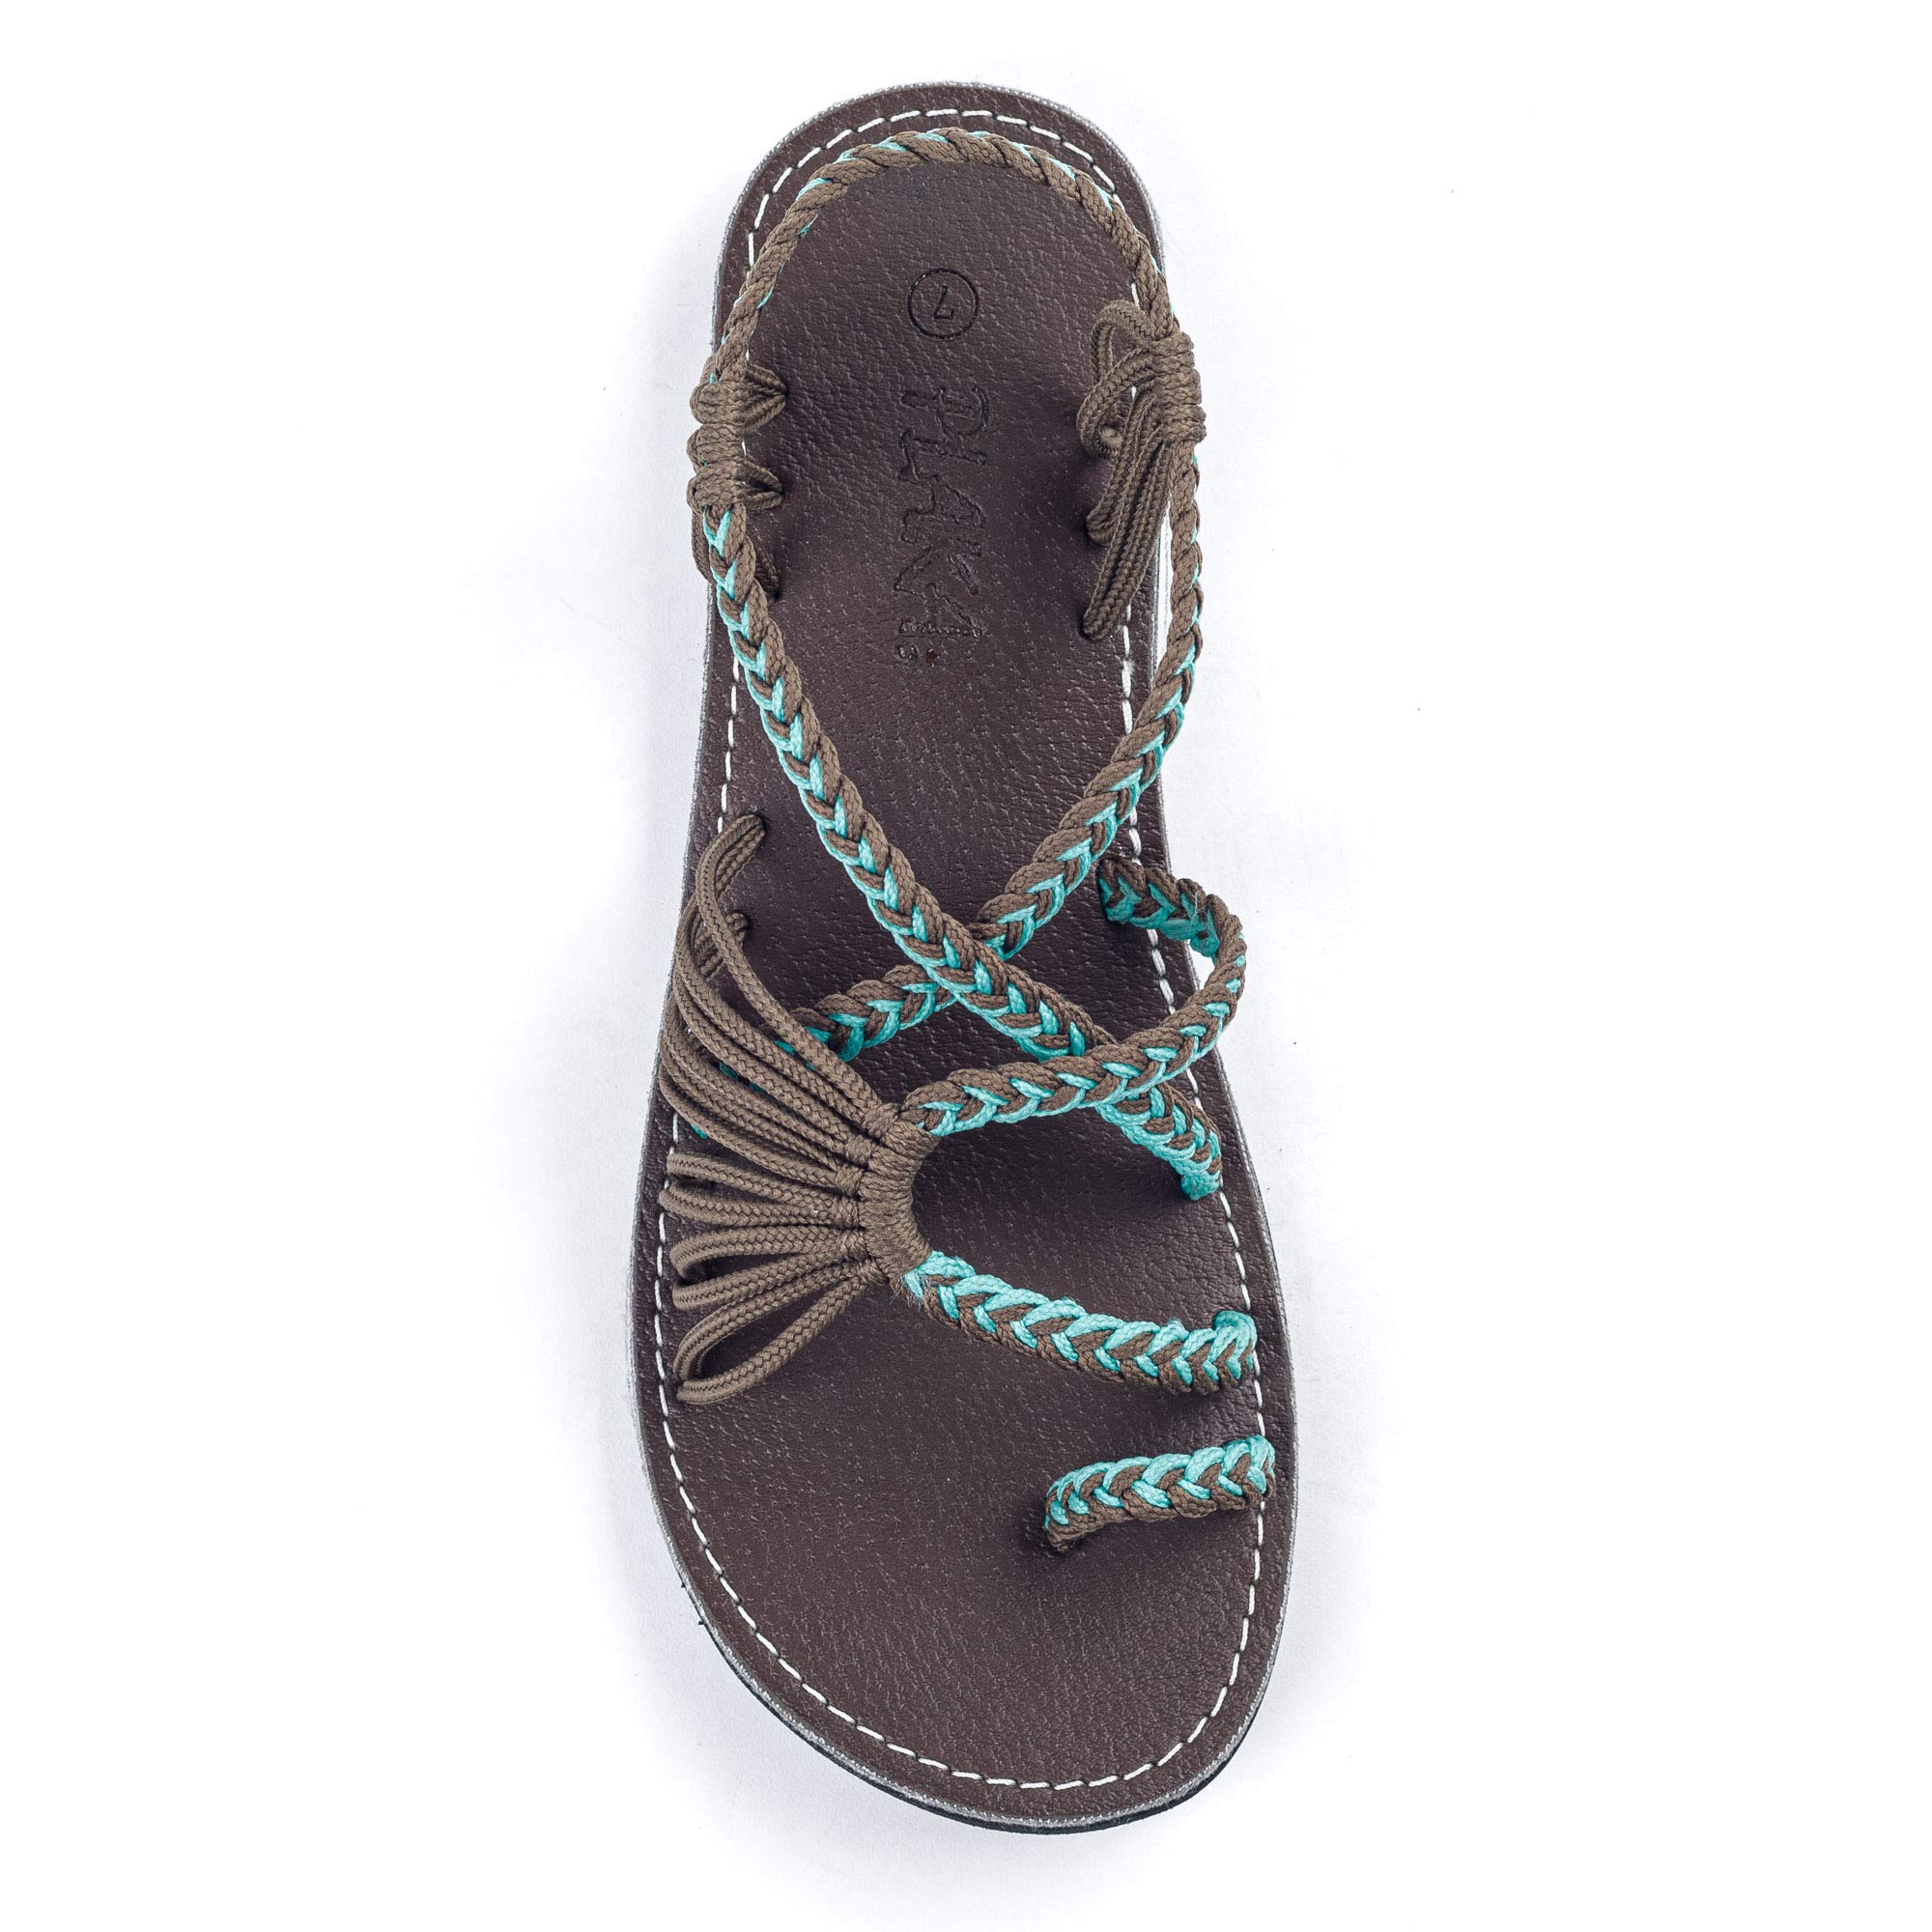 Plaka Flat Sandals for Women Palm Leaf